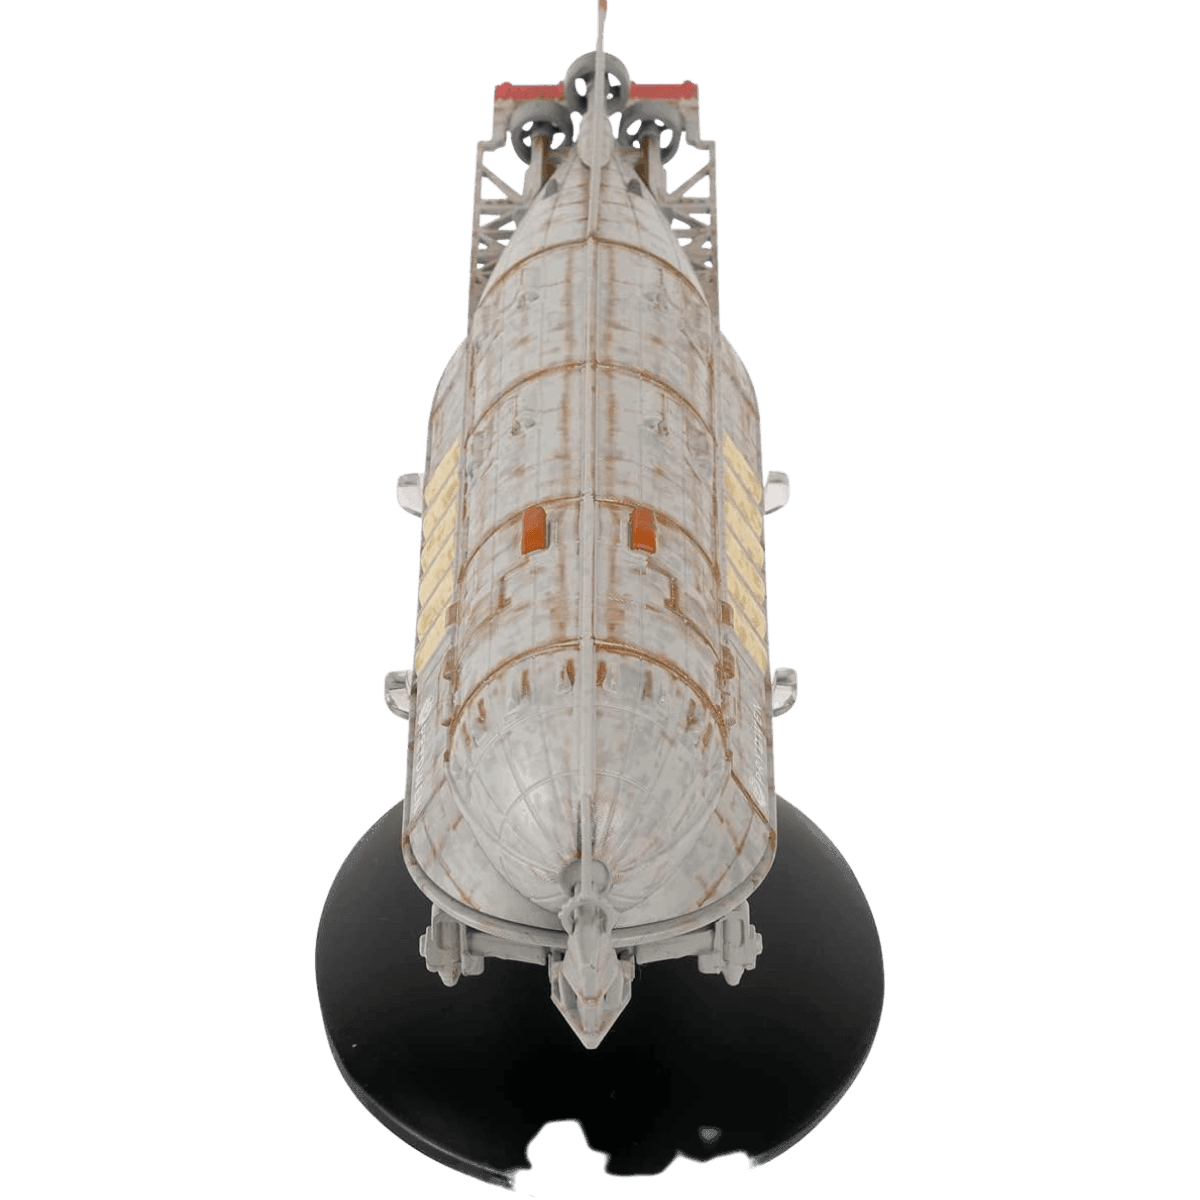 Fallout Prydwen Model Ship Replica (Eaglemoss Collections) - The Card Vault